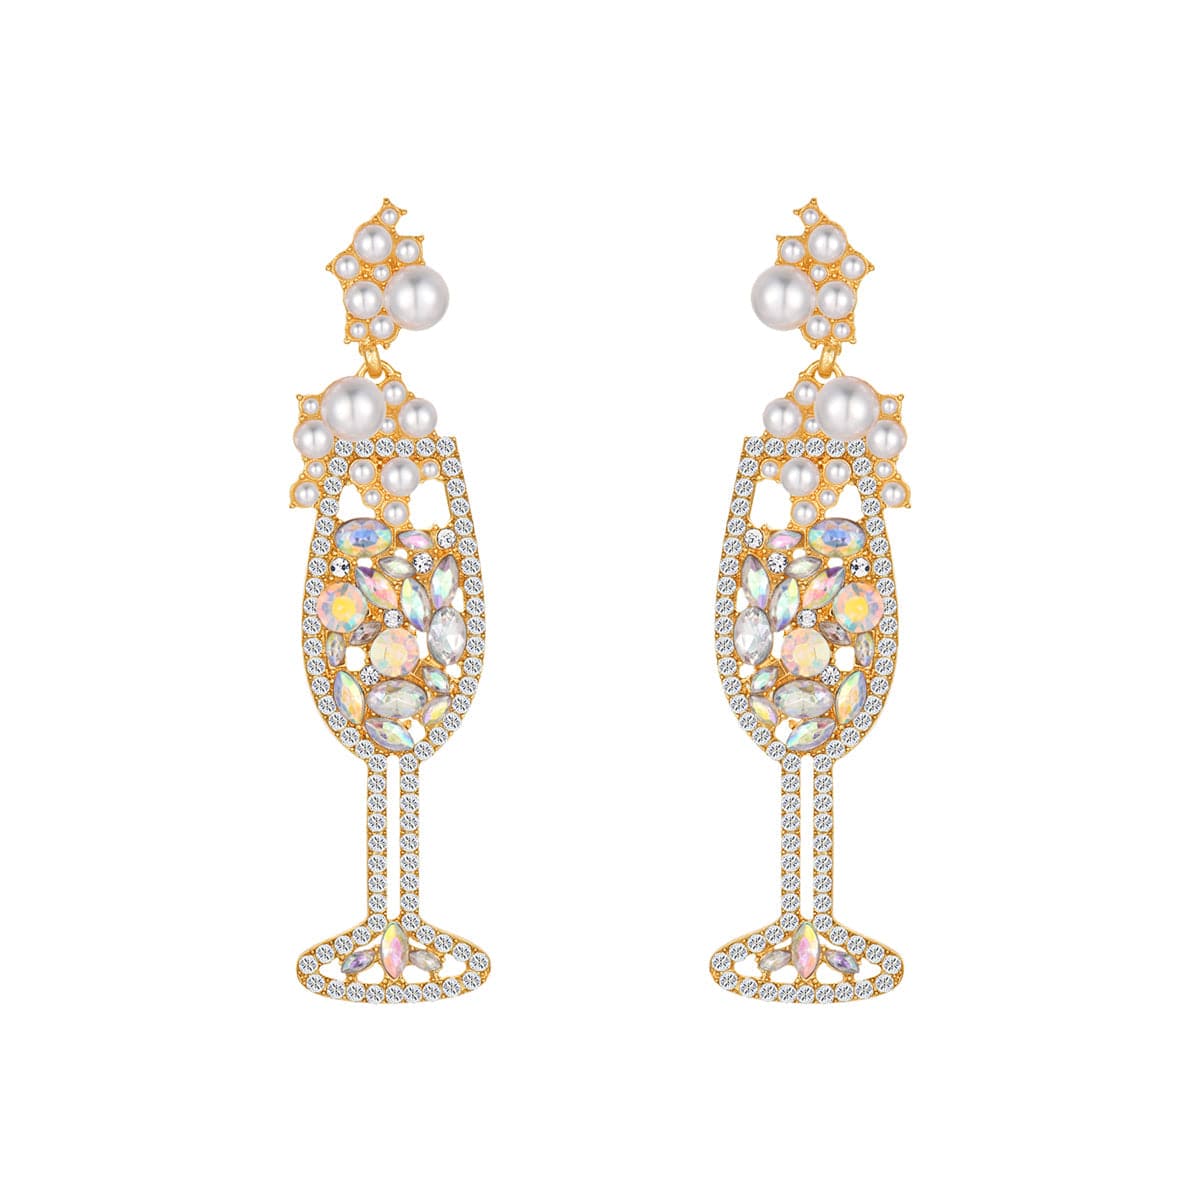 Crystal & Cubic Zirconia Champagne Flute Drop Earrings